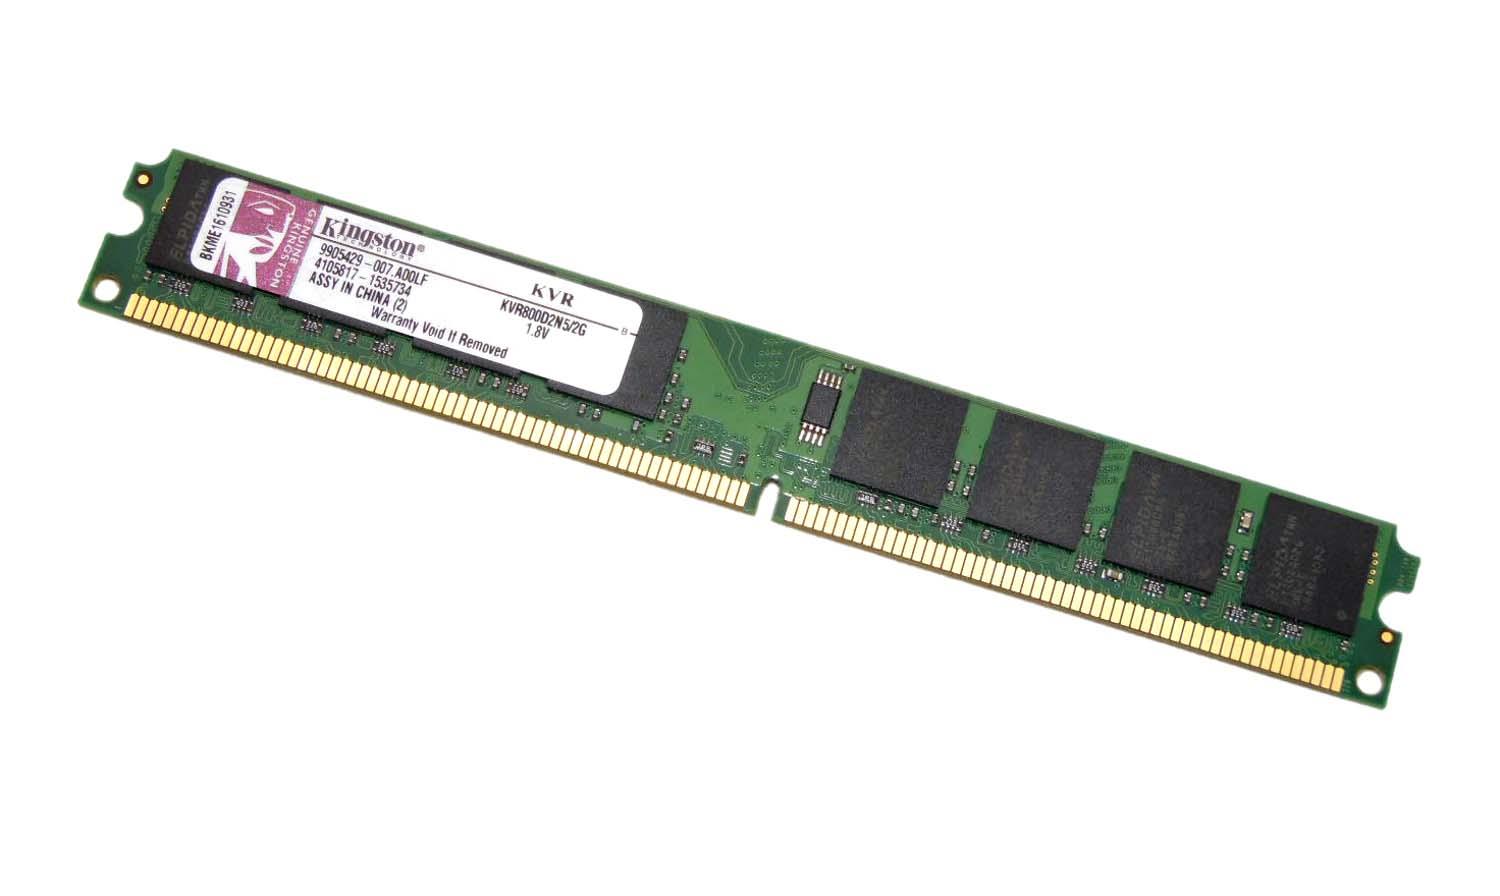 KINGSTON DDR2 2gb 800mhz (PC2-6400) PC Ram 240pin